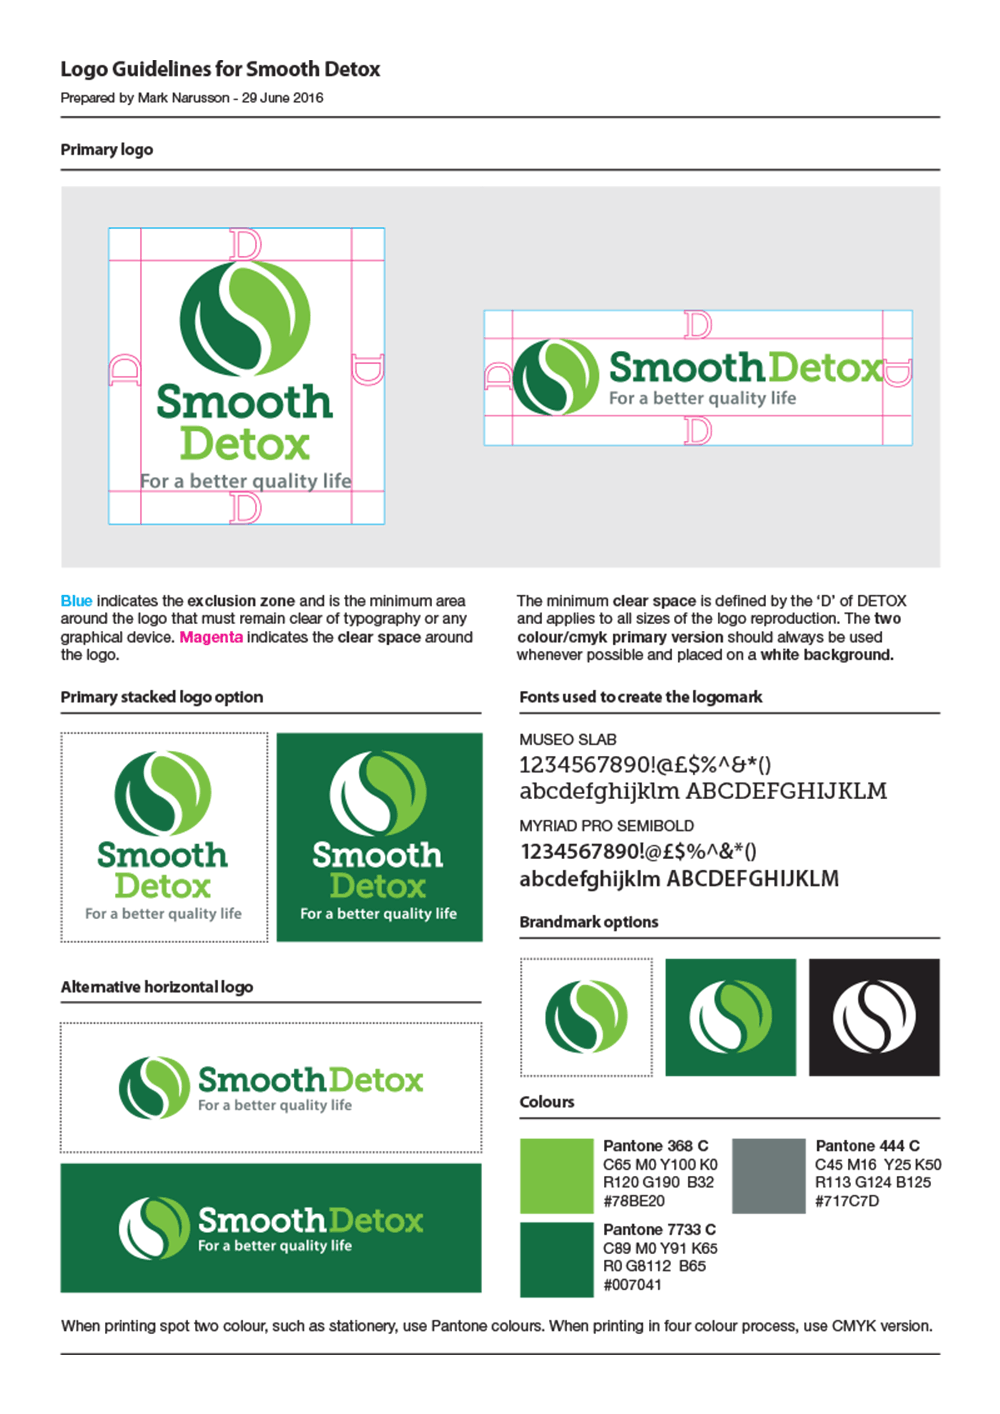 Smooth Detox logo guidelines2